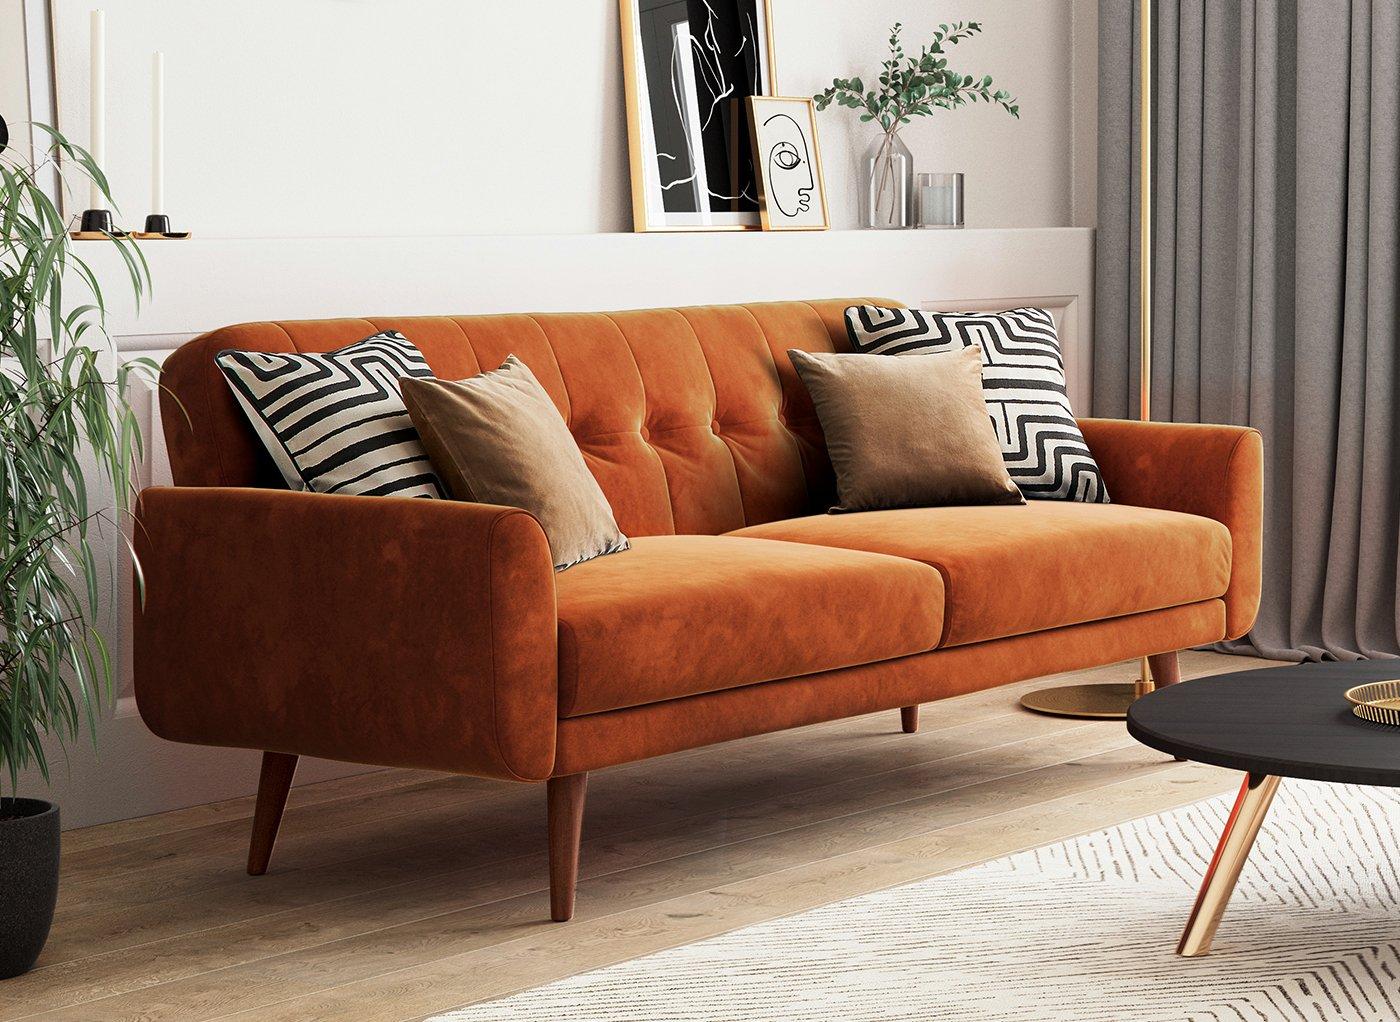 sofa bed orange county